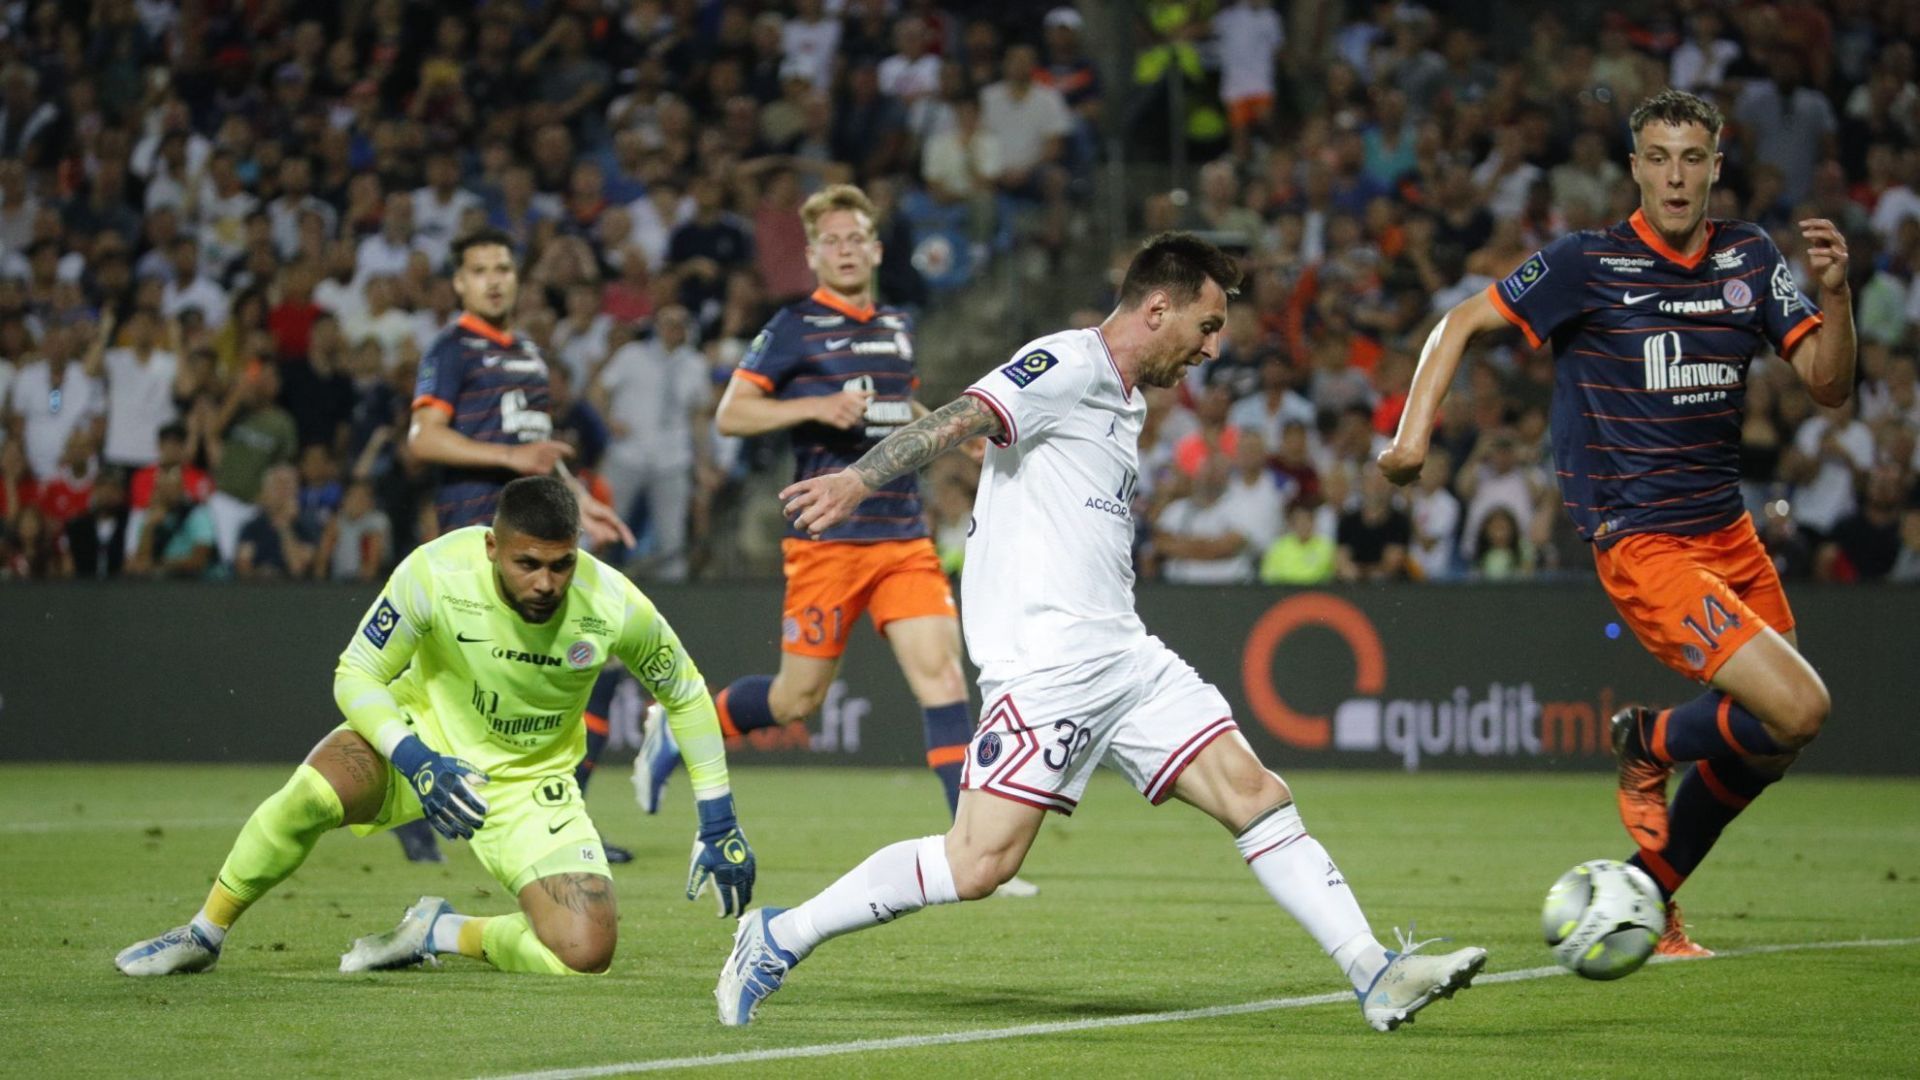 Lionel Messi scores to make it 2-0 for Paris Saint-Germain against Montpellier.